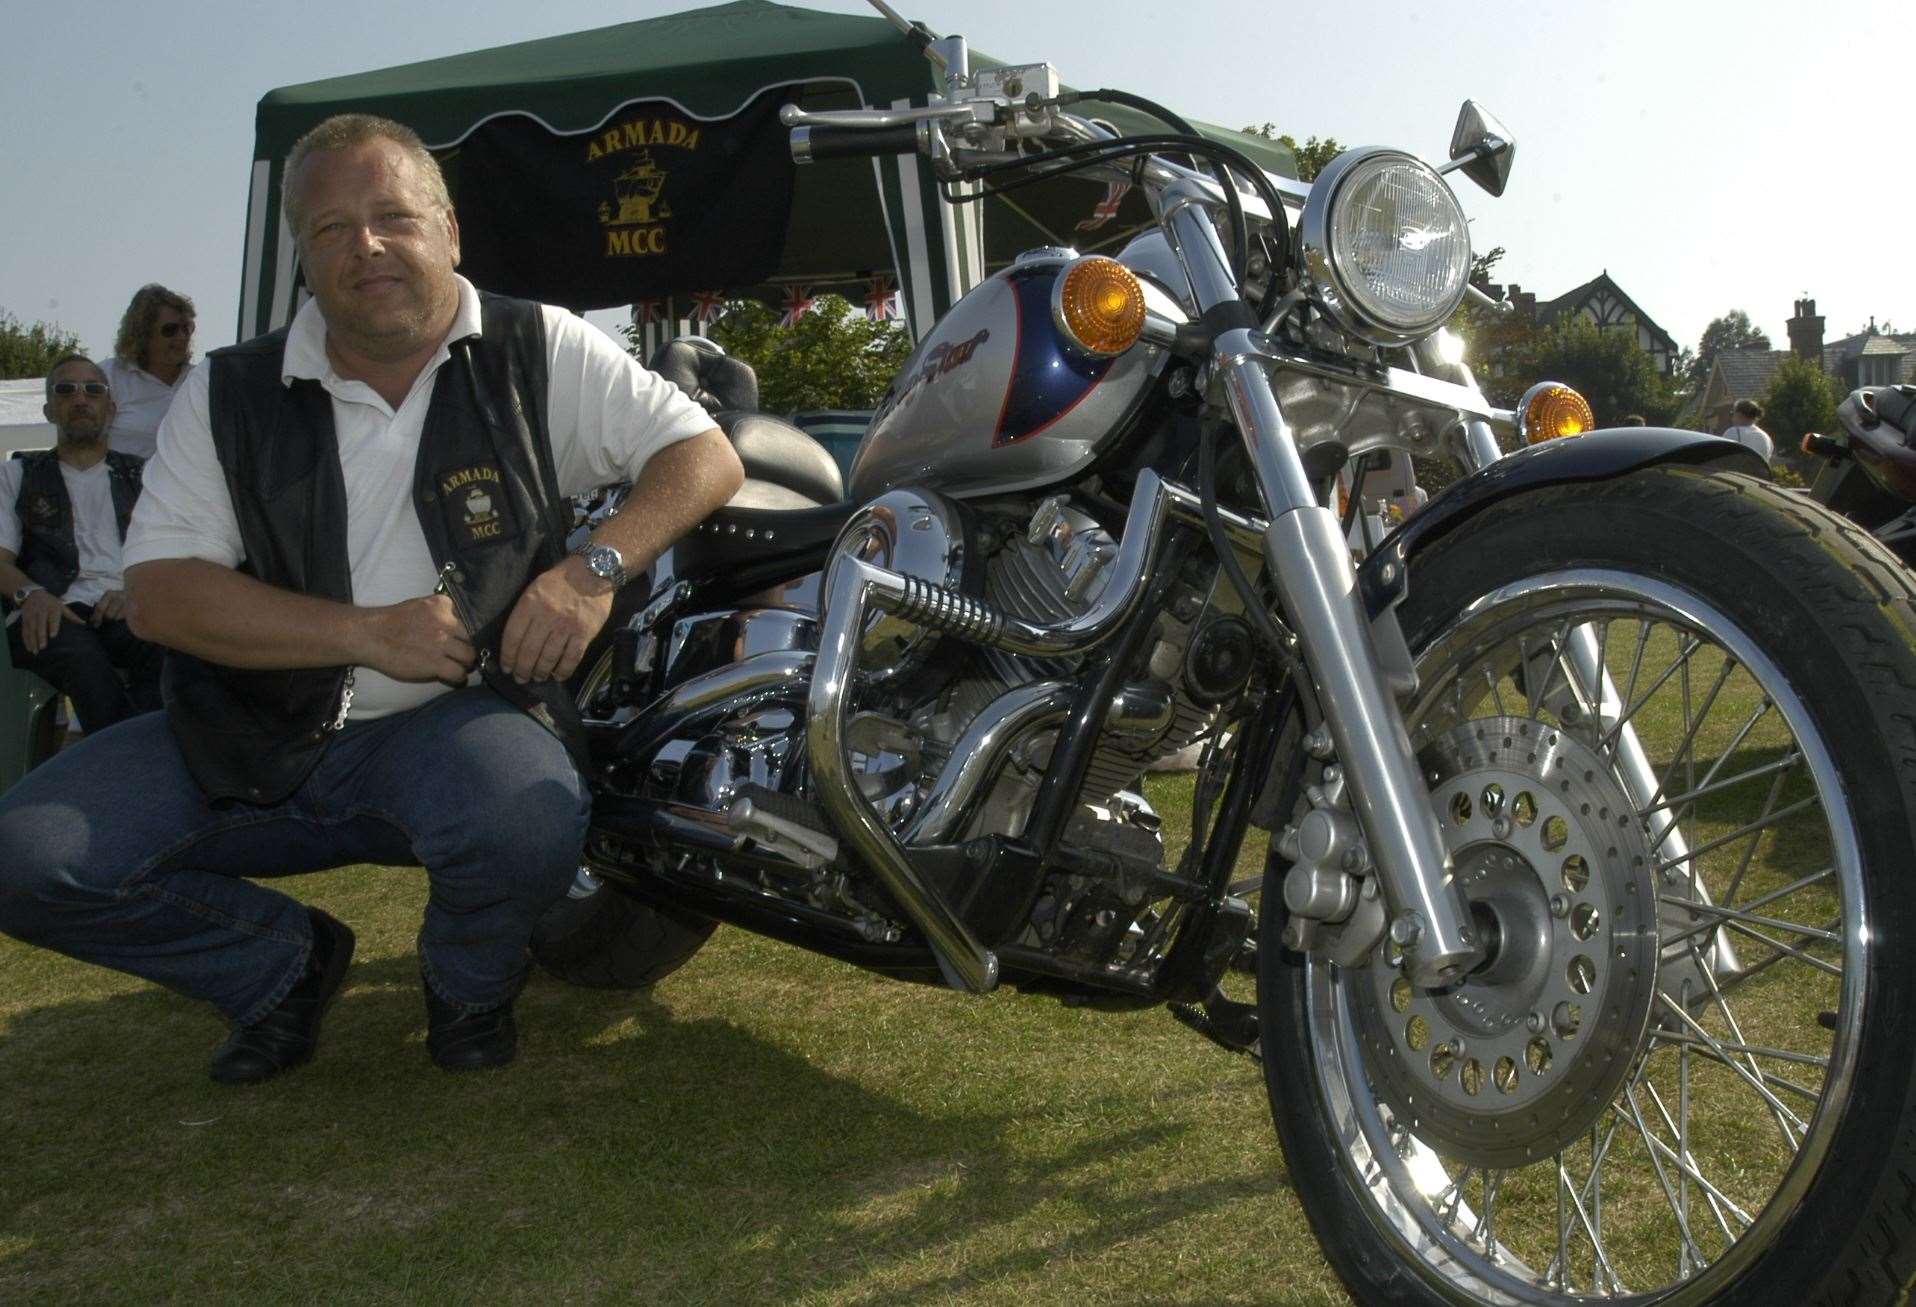 Folkestone Lions Club - Donkey Derby Kurt Stephens - Armada MCC with his motorbike Drag Star (3231234)